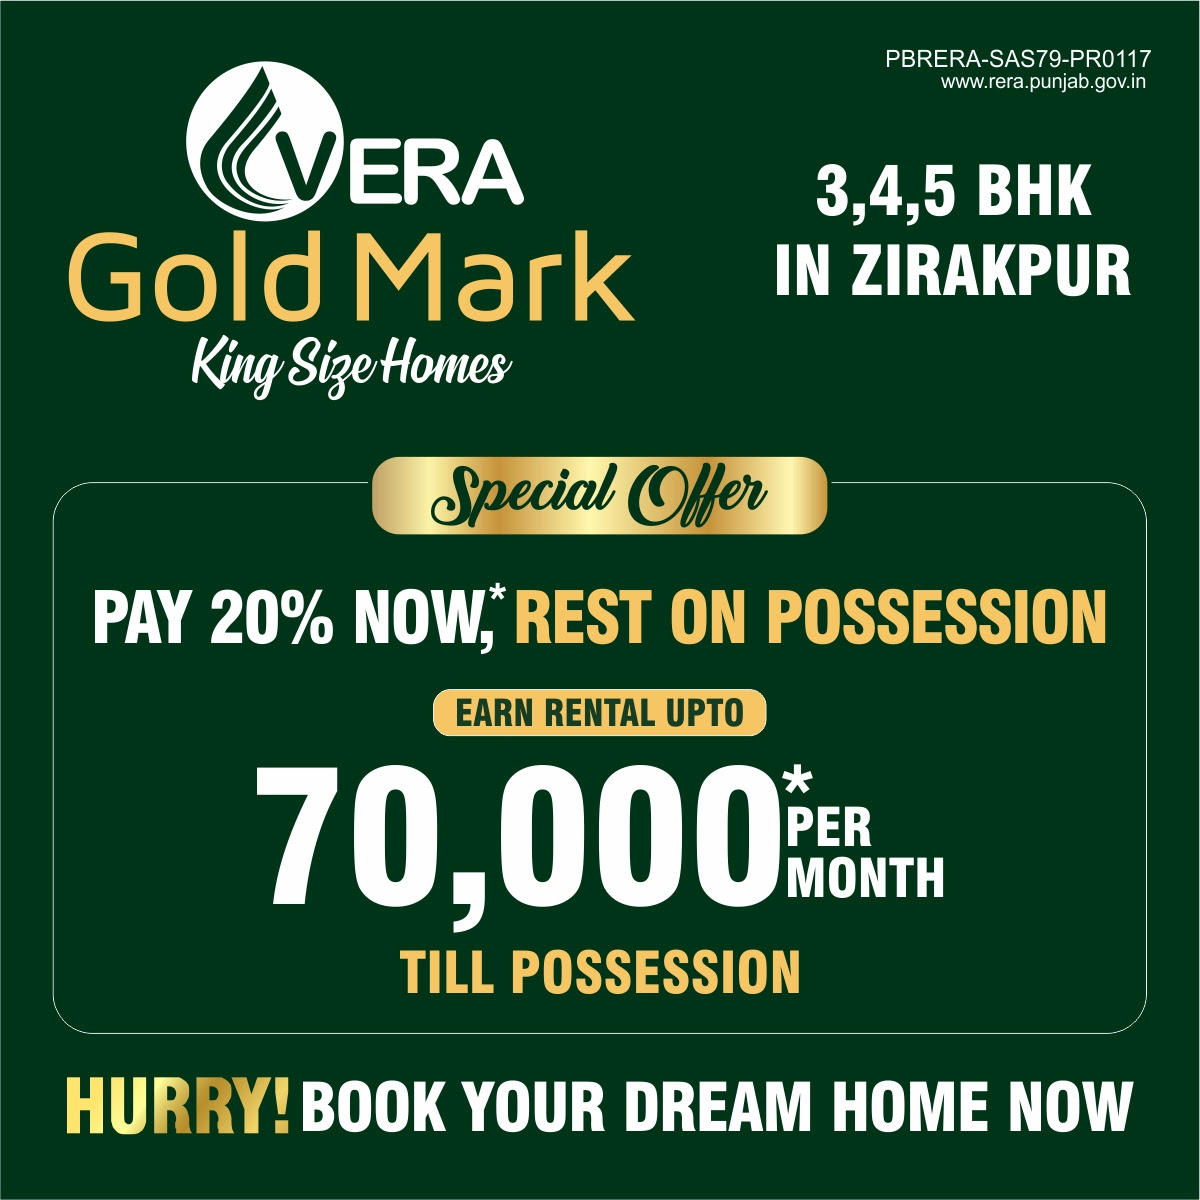 Pay 20% now rest on possession at Vera Gold Mark, Zirakpur